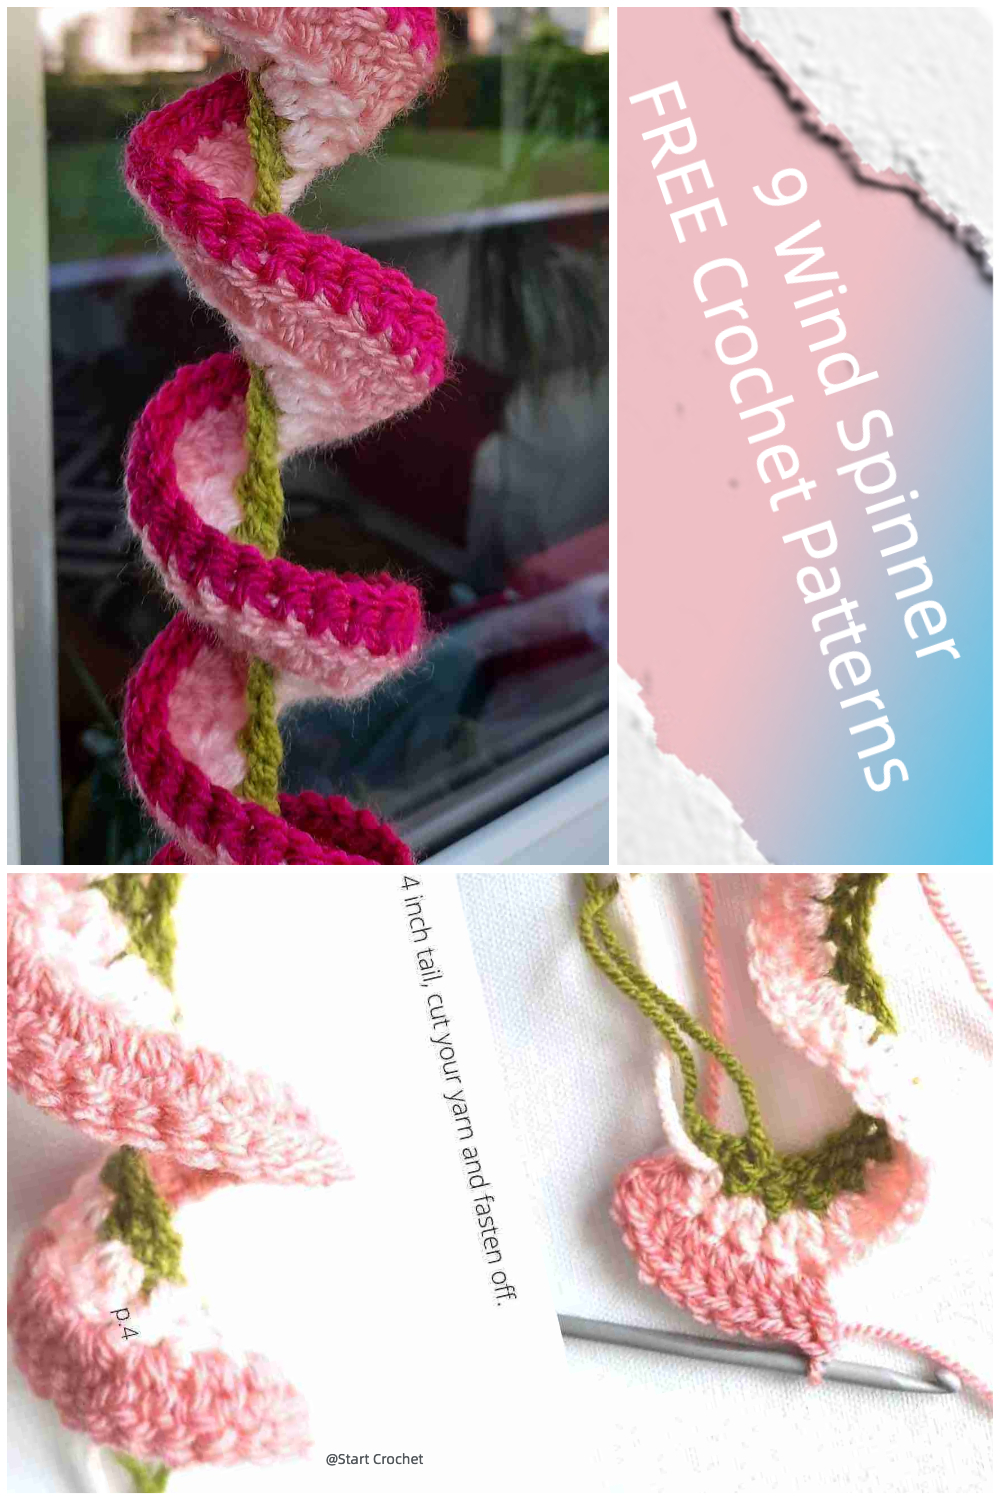 9 Wind Spinner FREE Crochet Patterns